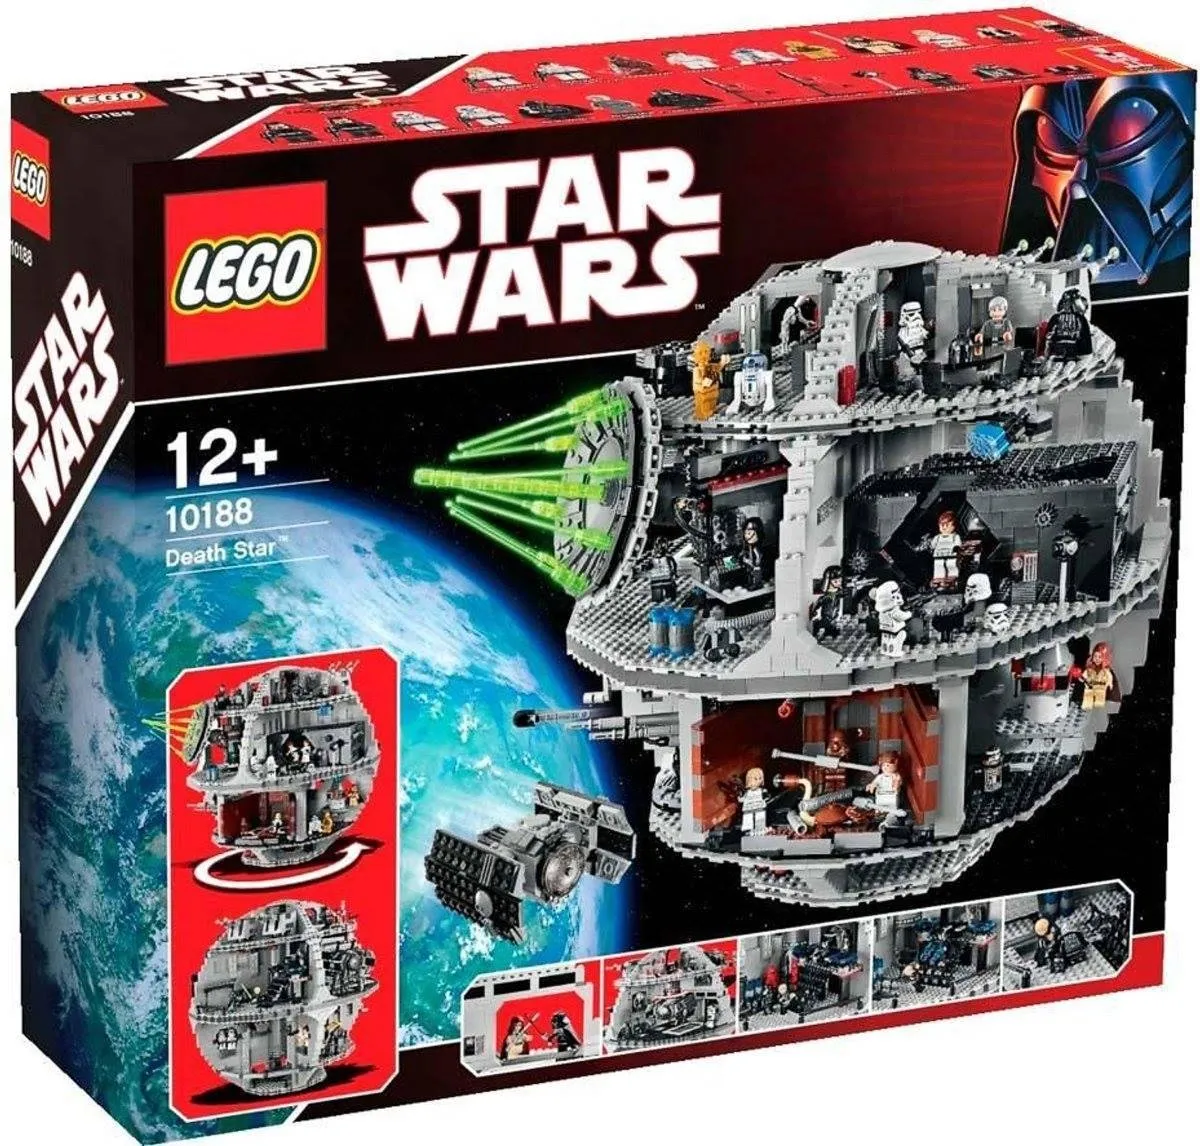 Lego Star Wars 10188 Death Star speelgoed